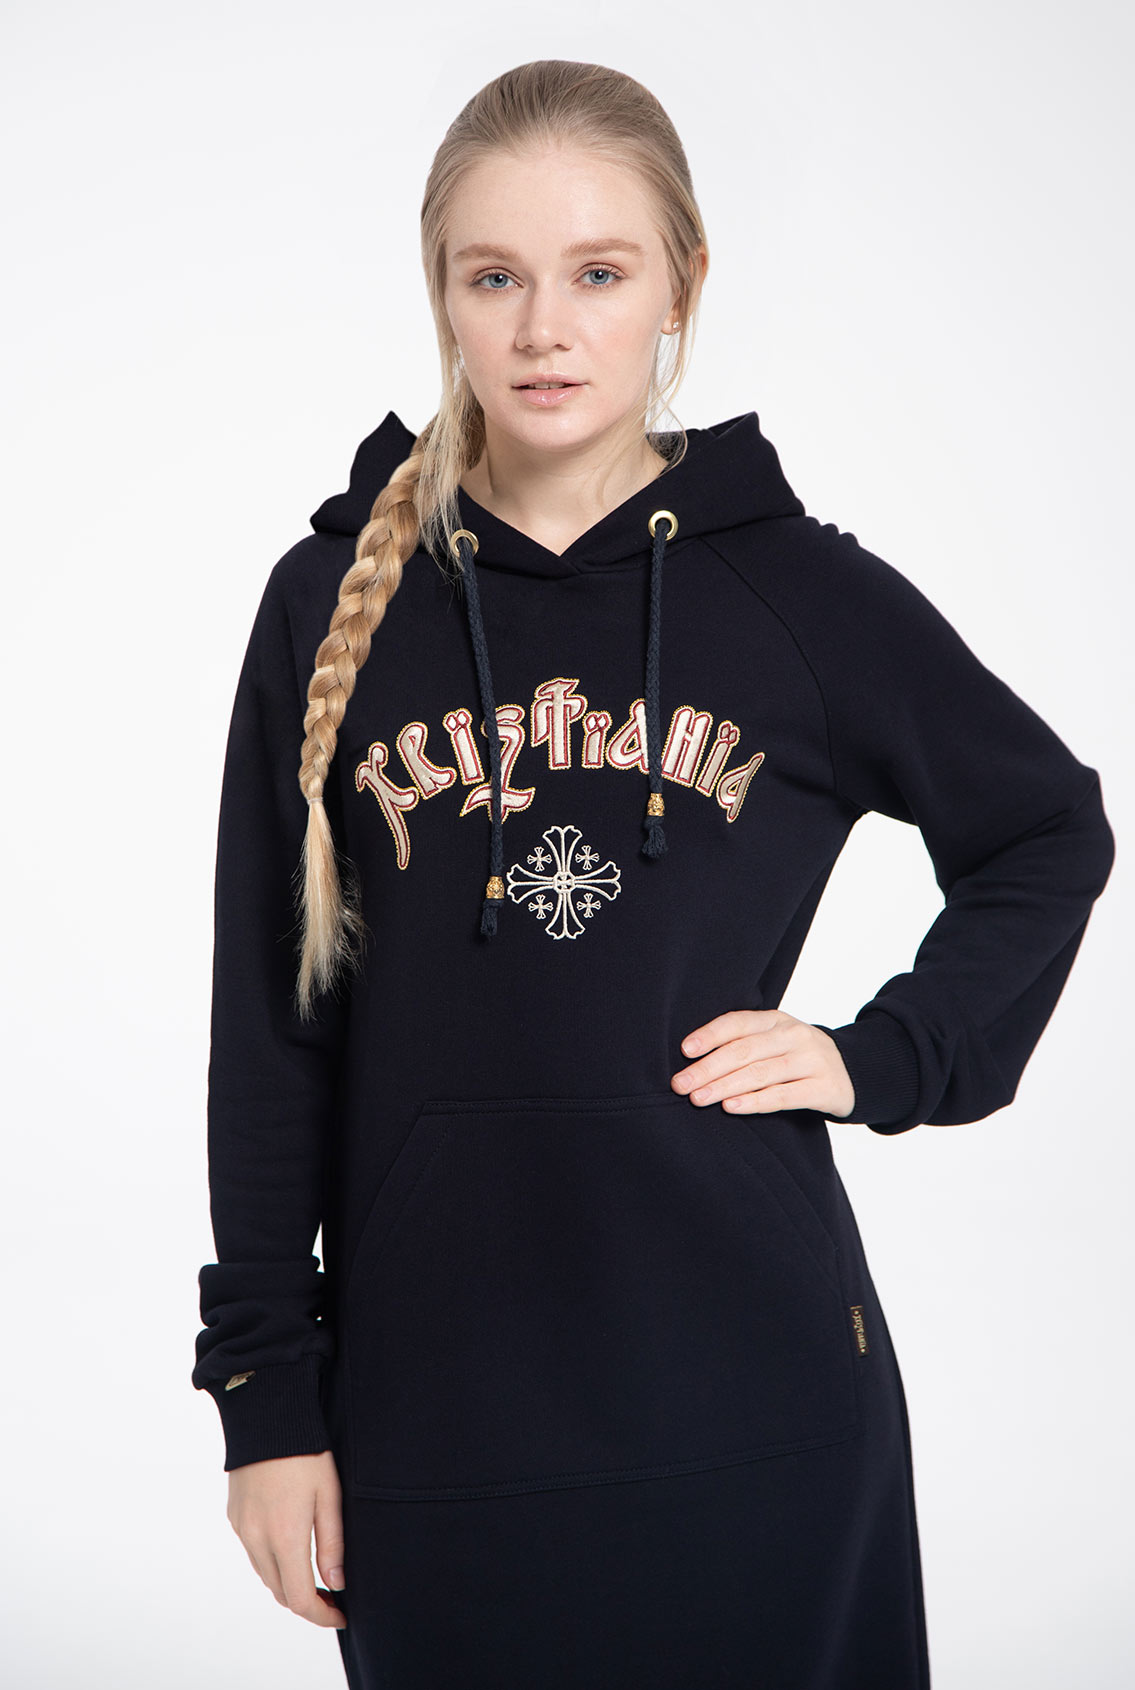 Christiania hoodie dress